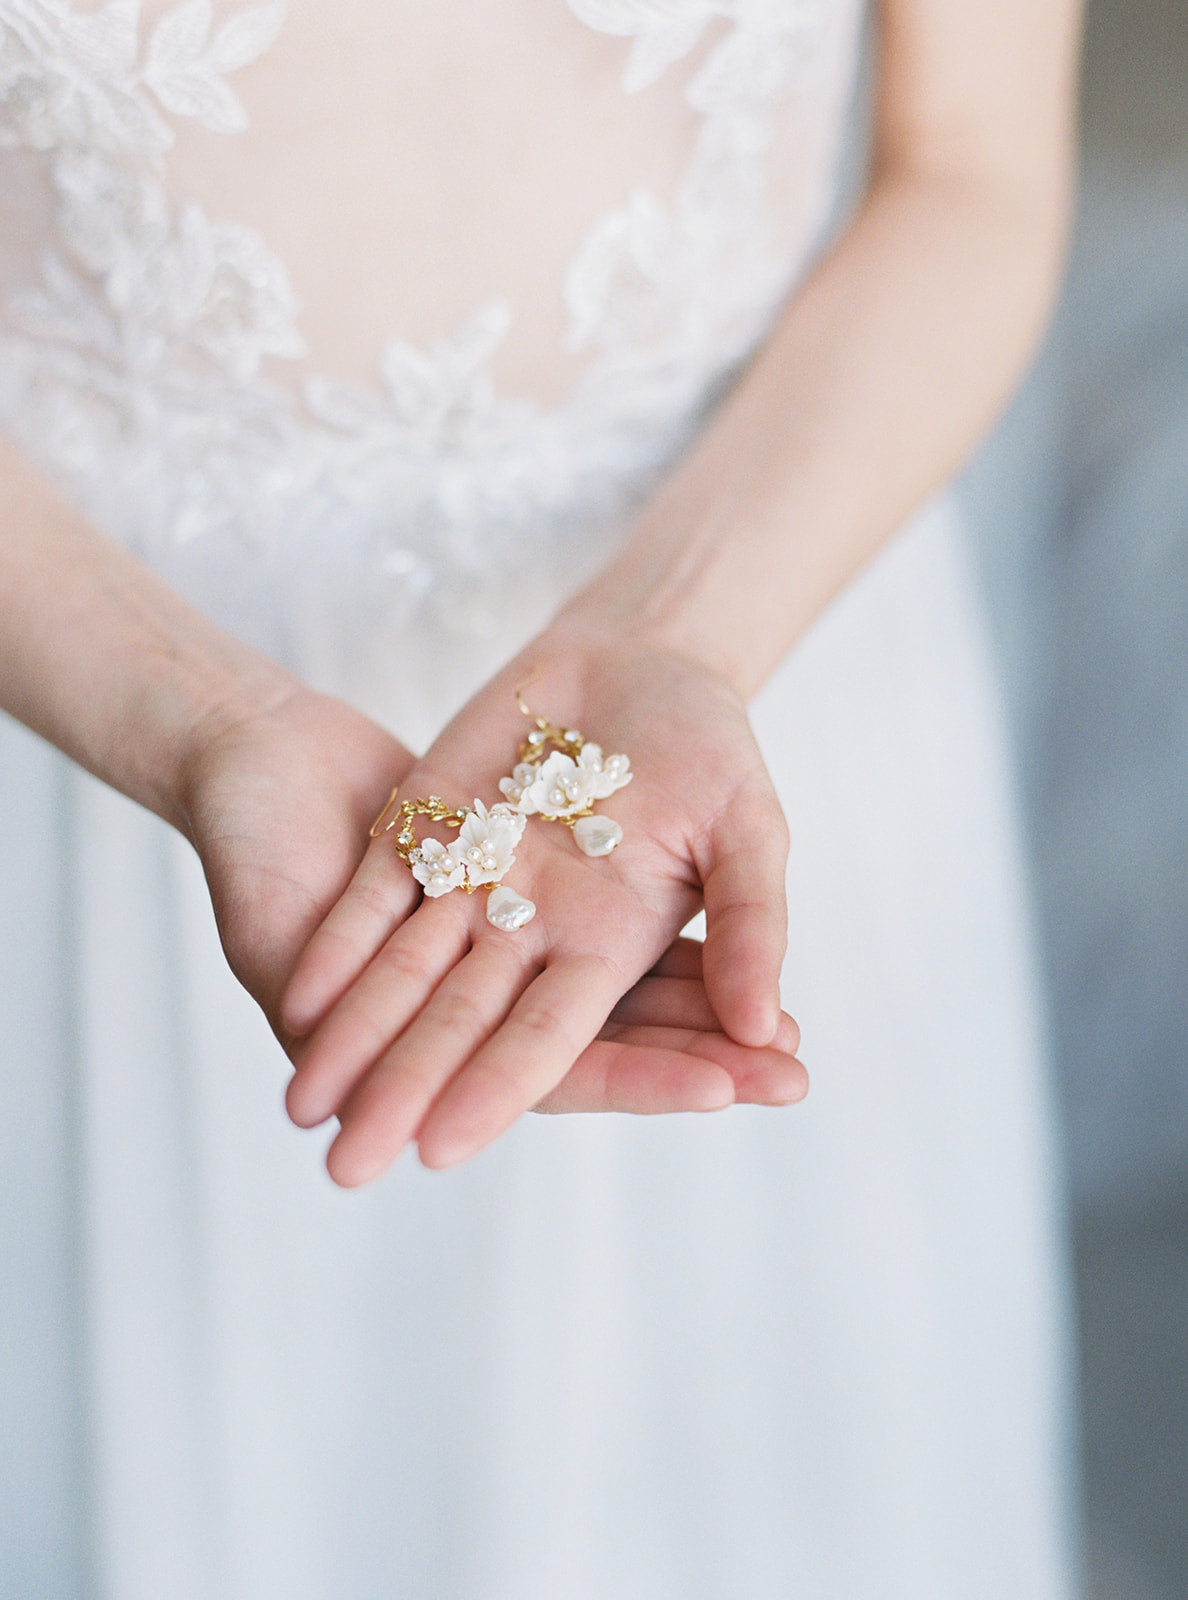 Rose Gold Teardrop Earrings | Bride Bridal Bridesmaid Wedding Jewelry -  Glitz And Love